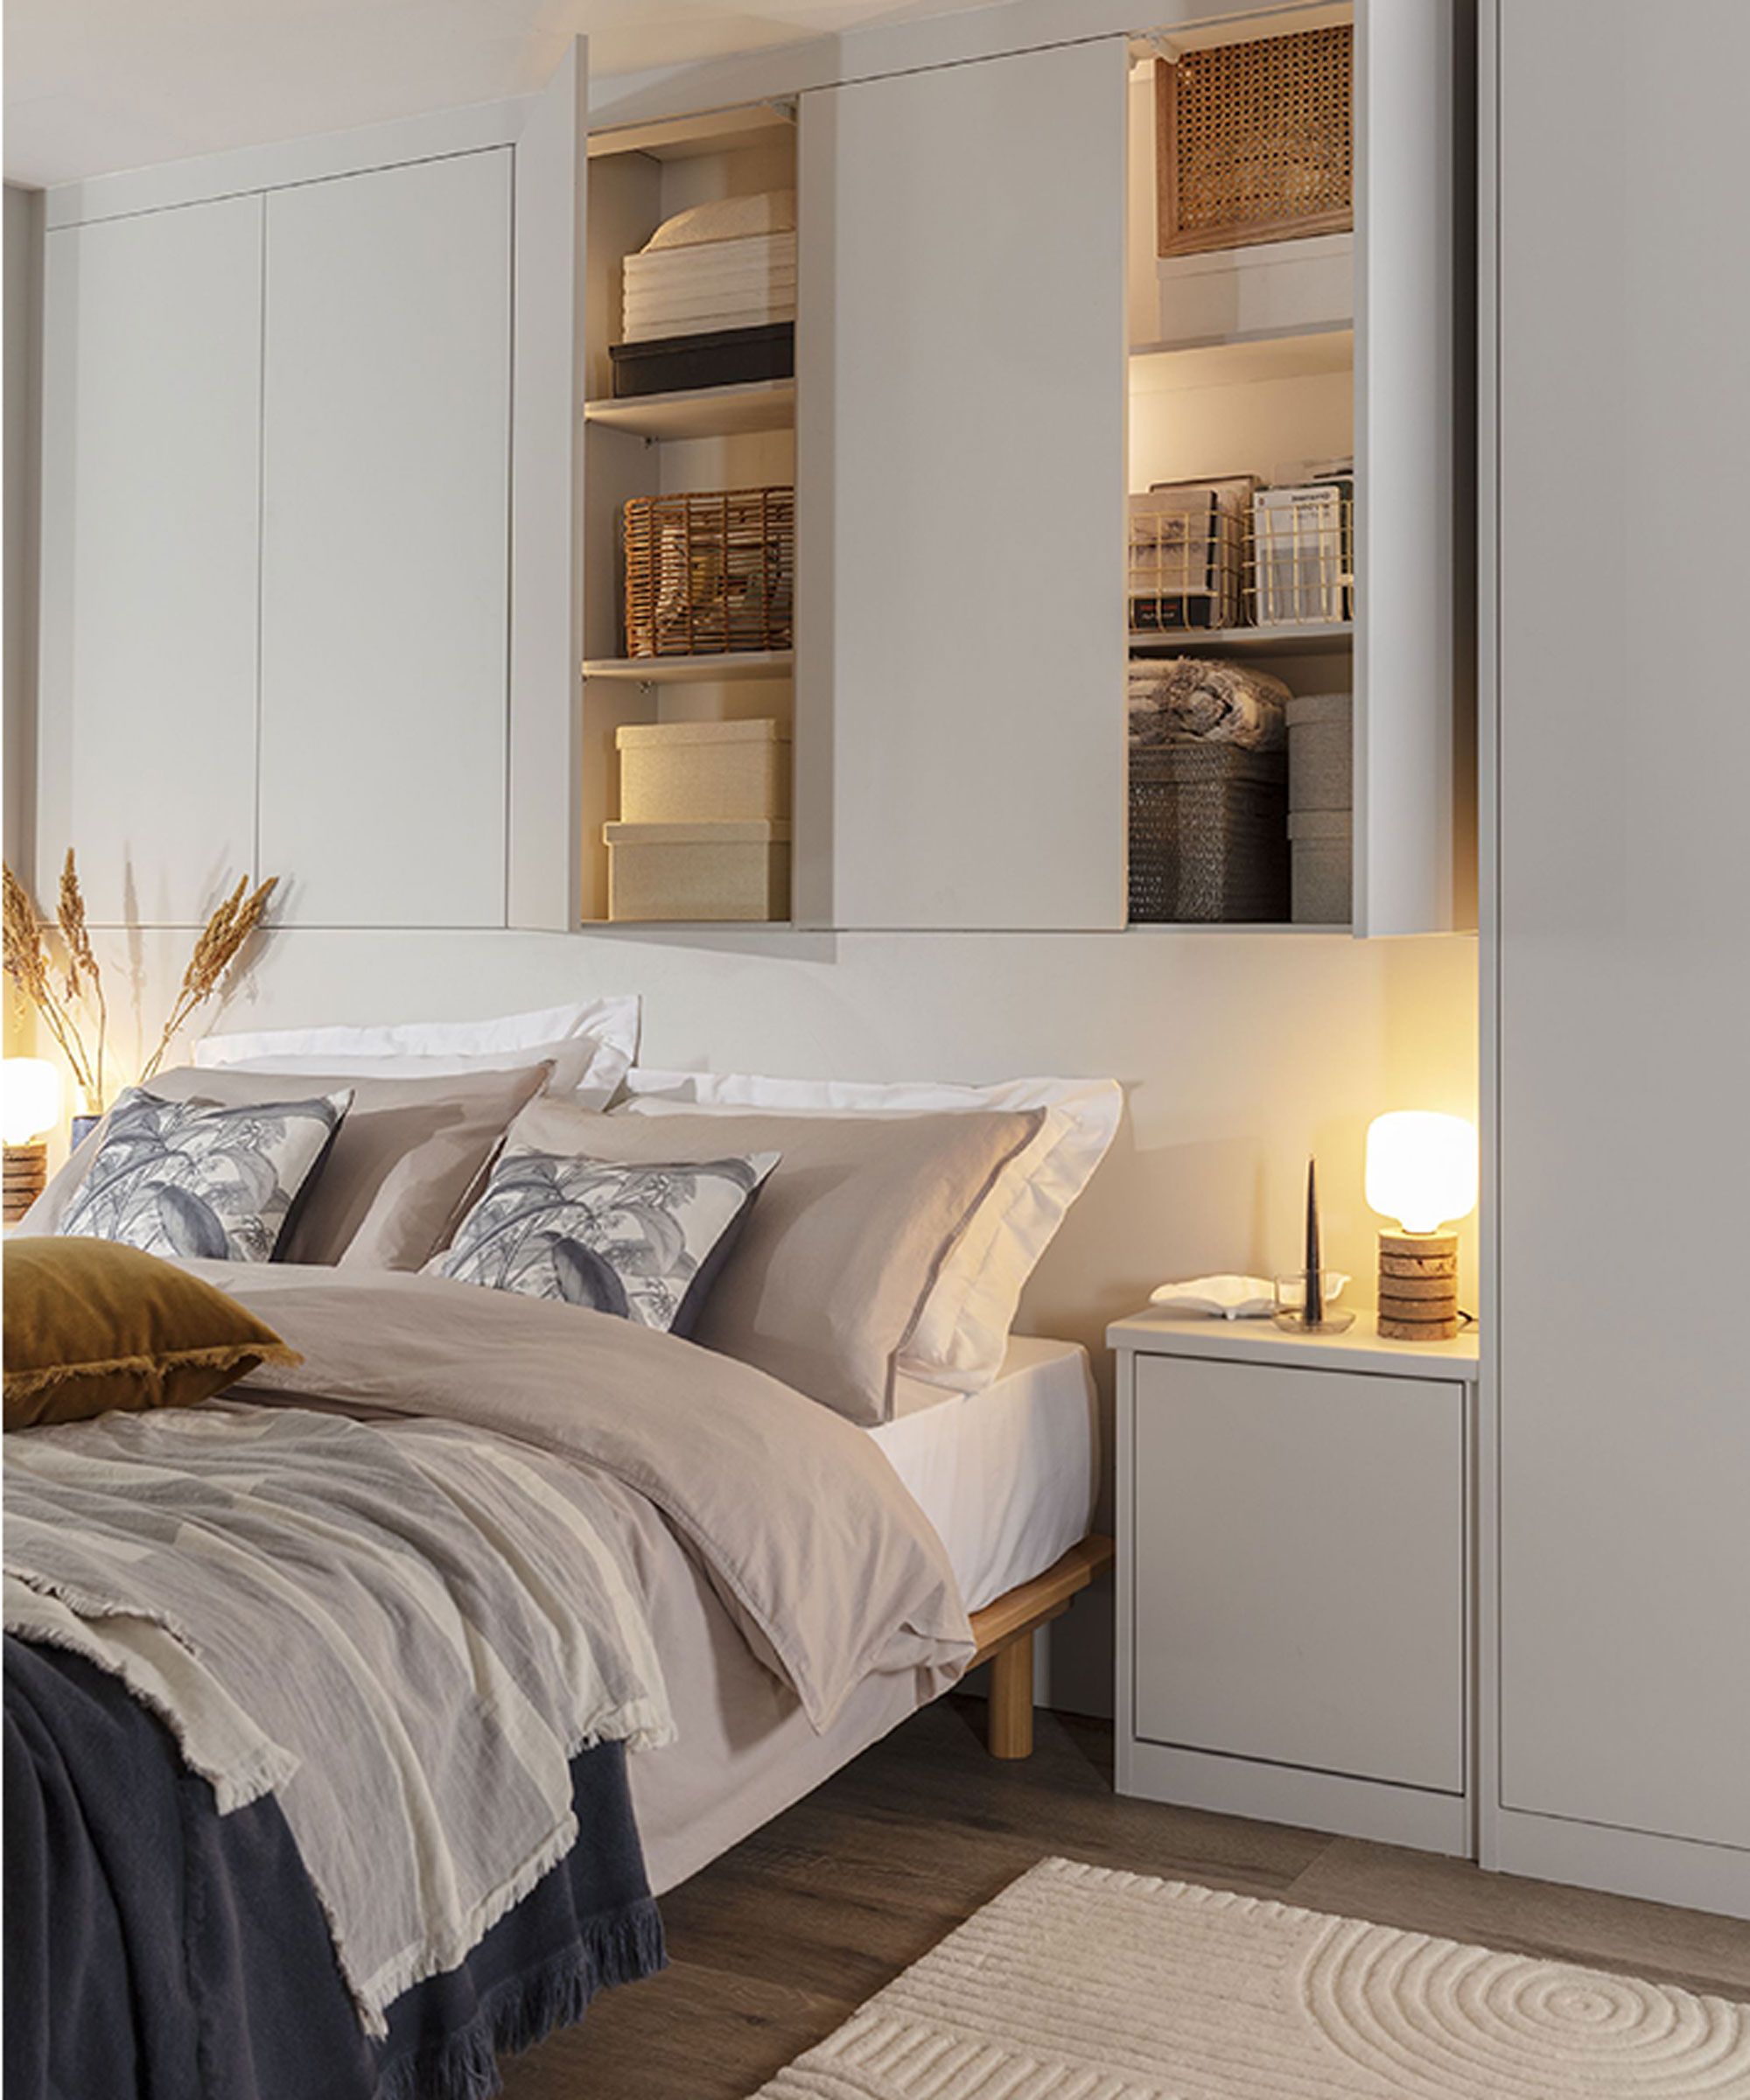 Overbed Storage Ideas – Ways To Boost Bedroom Stash Space | Regarding Overbed Wardrobes (Gallery 12 of 20)